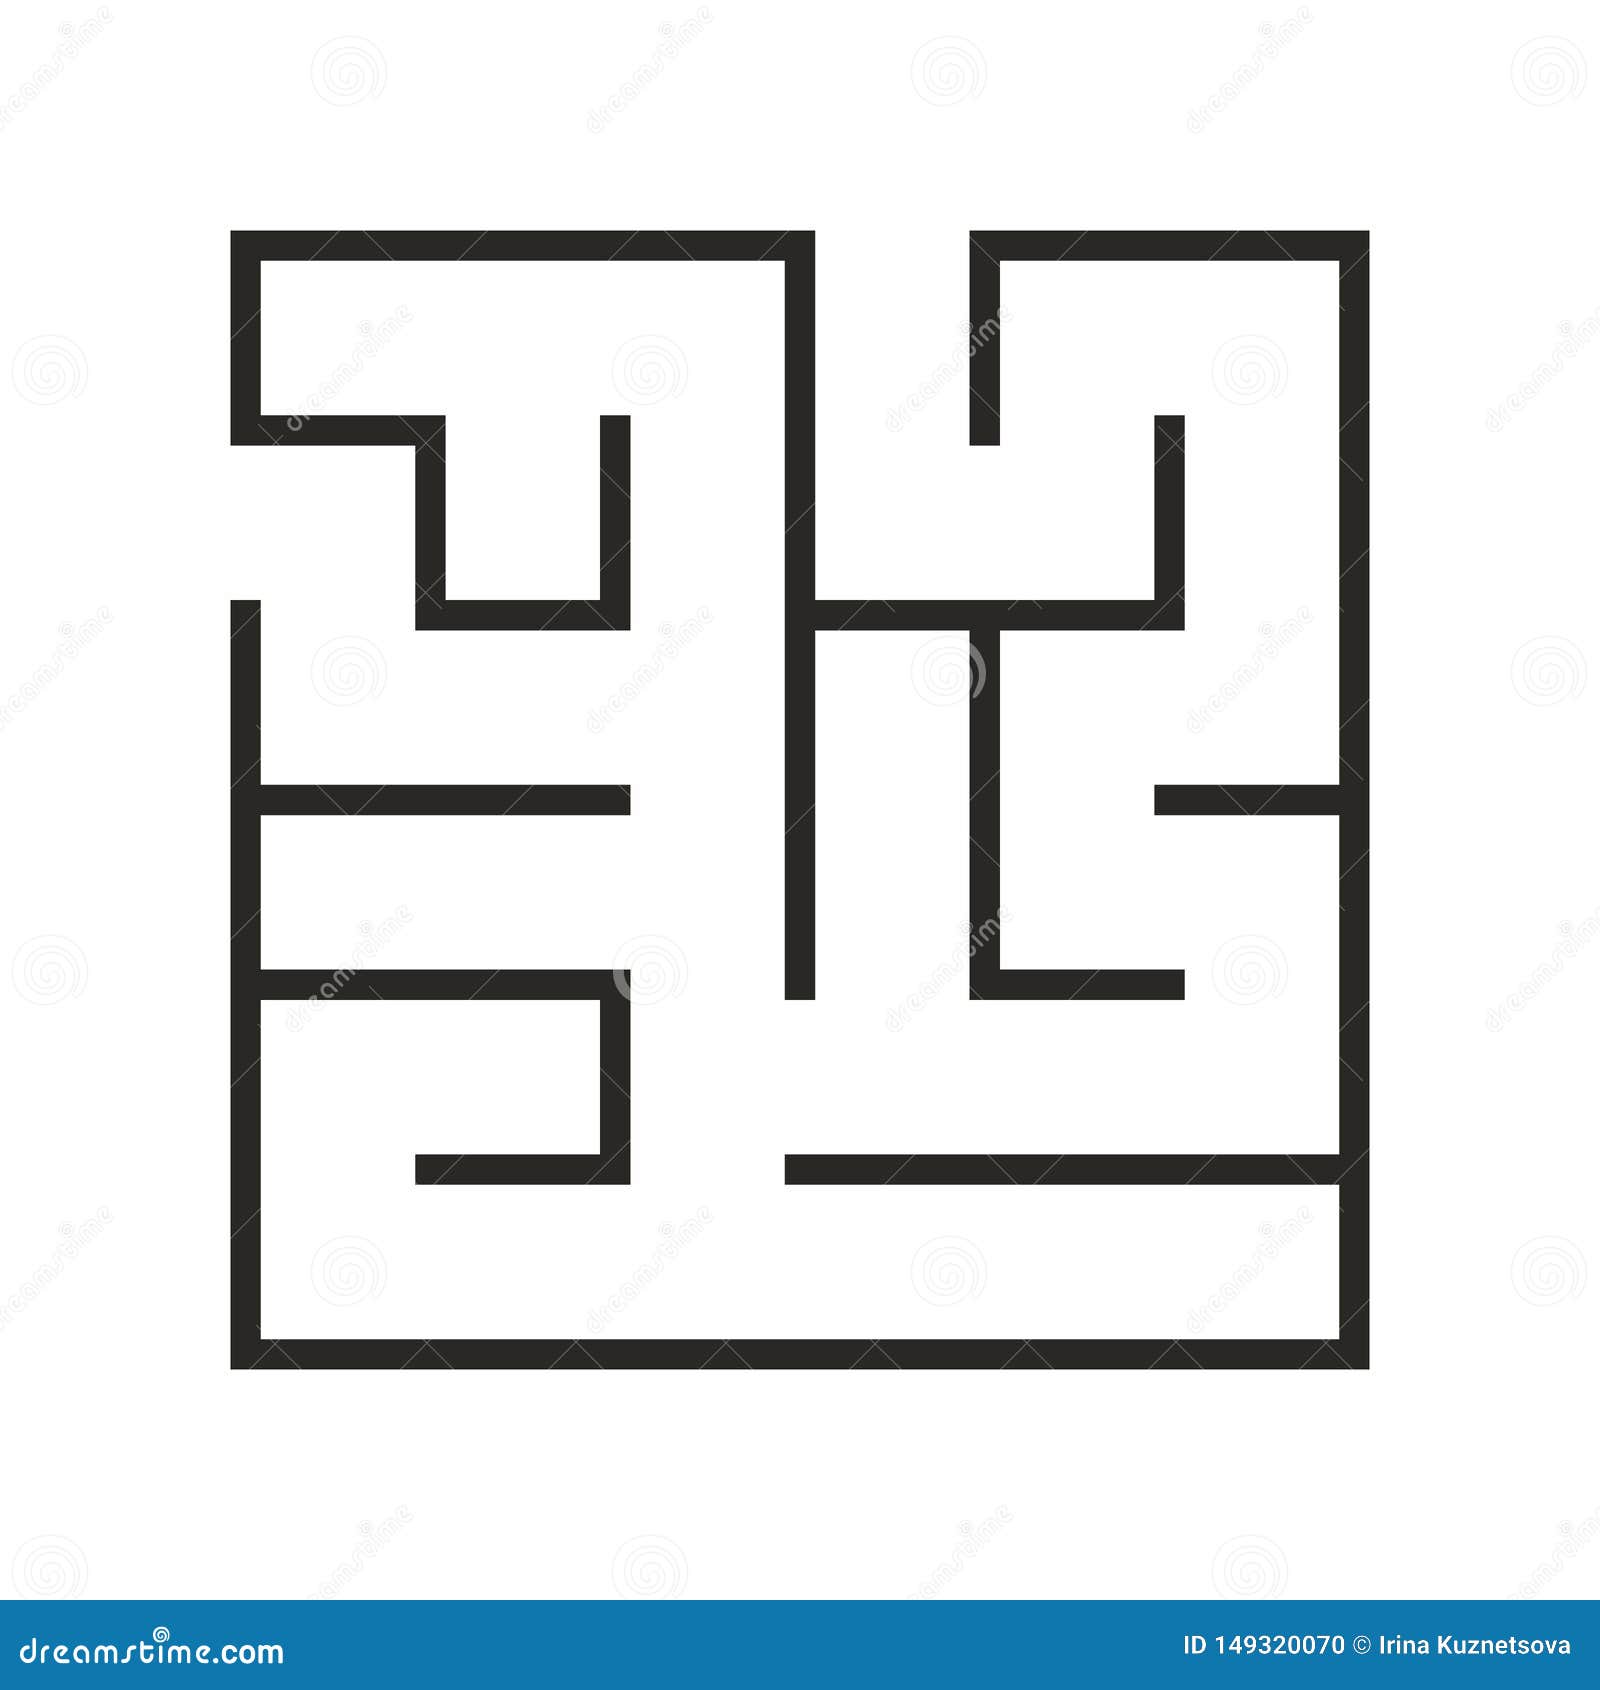 Easy Maze Wallpaper